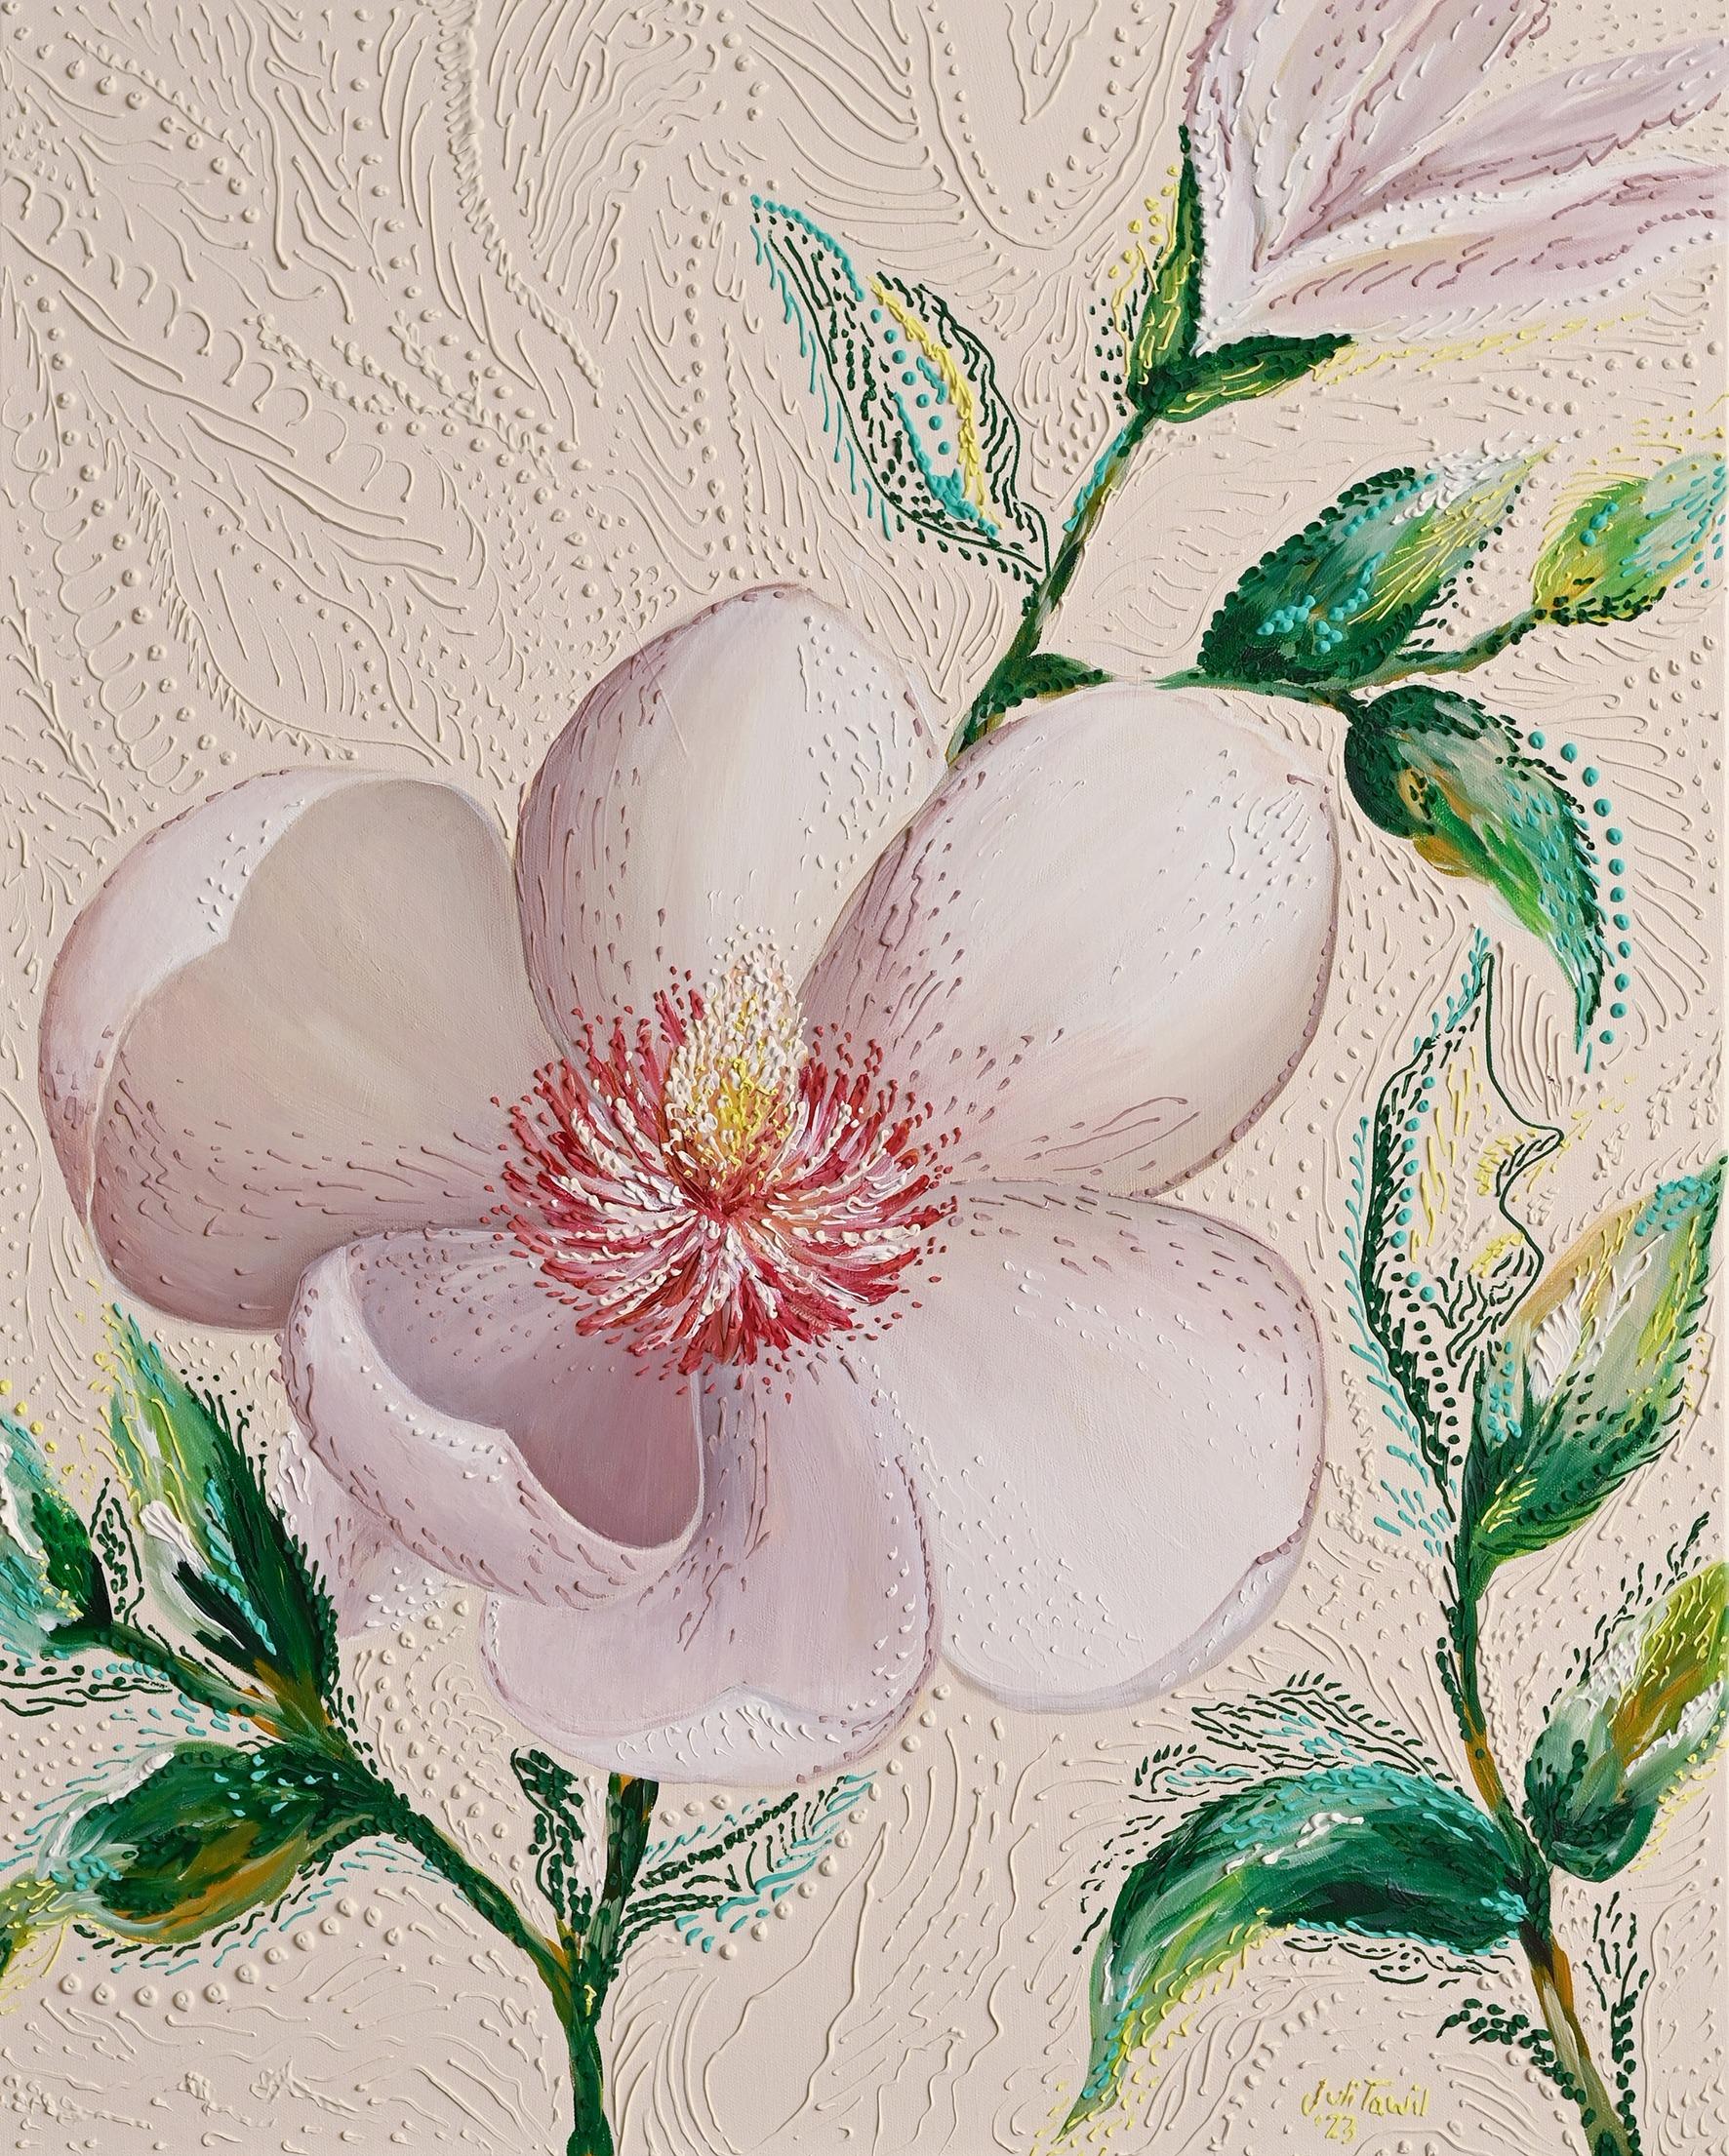 Magnolia de Julieta Tawil - Painting de Unknown